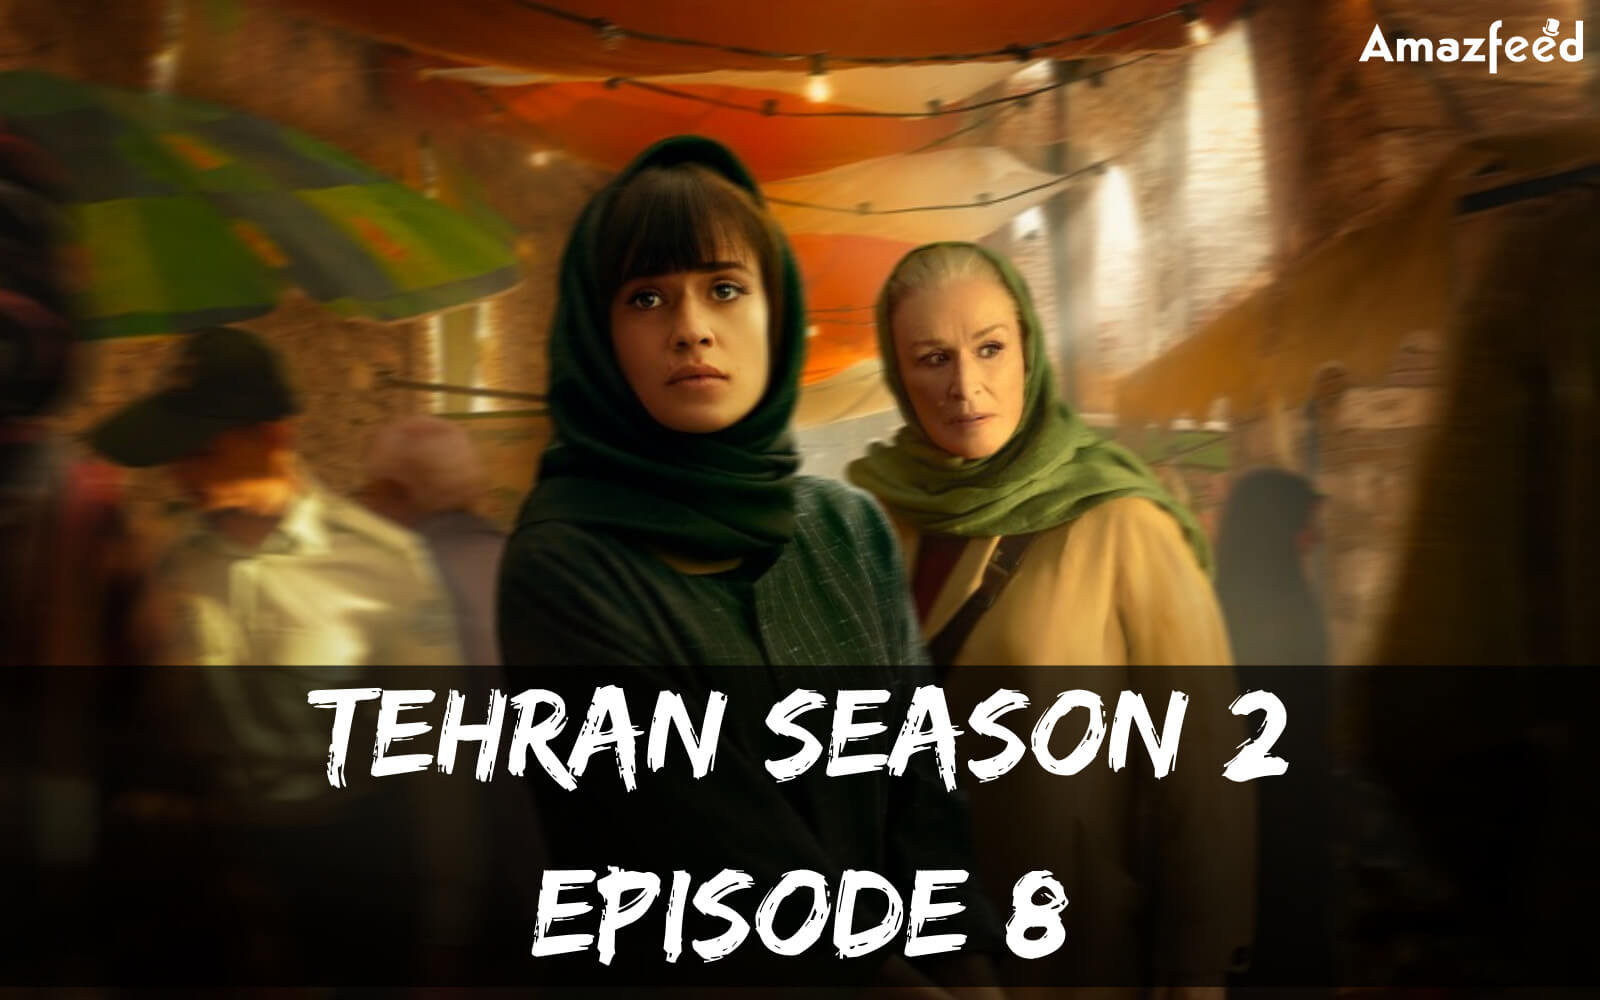 Tehran Season 2 Episode 8 release date